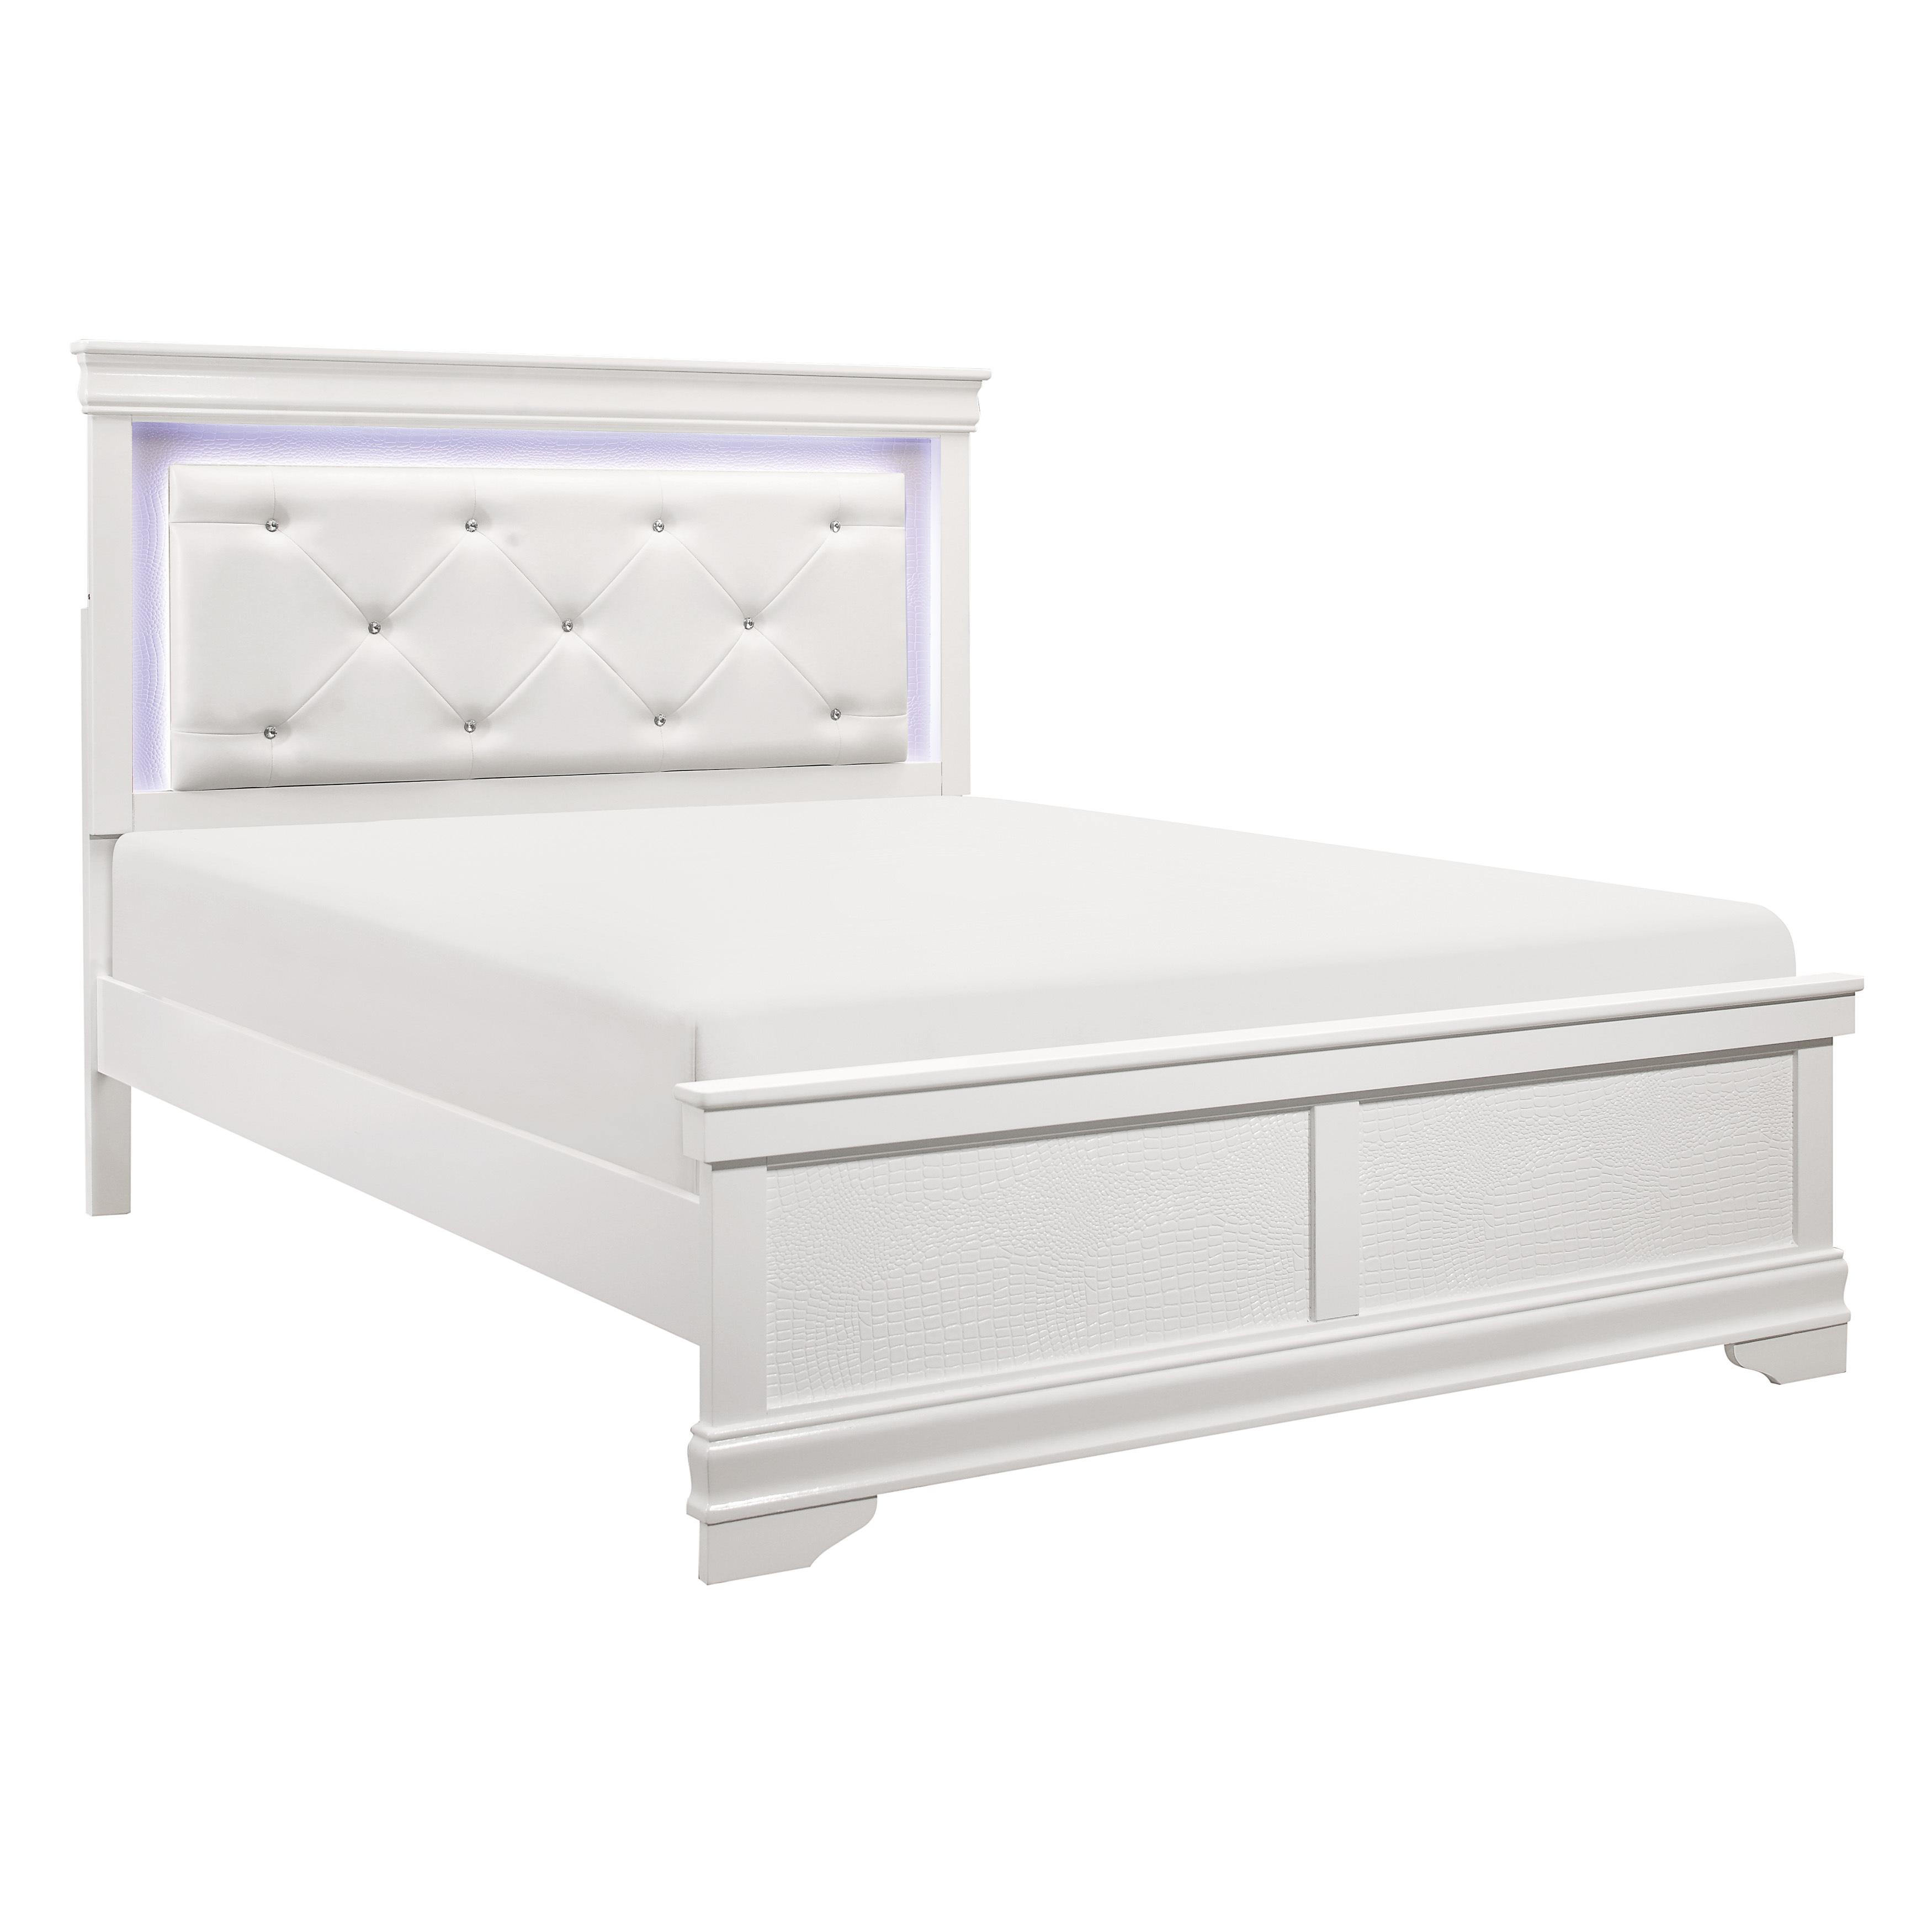 

    
Traditional White Wood Twin Bedroom Set 3pcs Homelegance 1556WT-1* Lana
